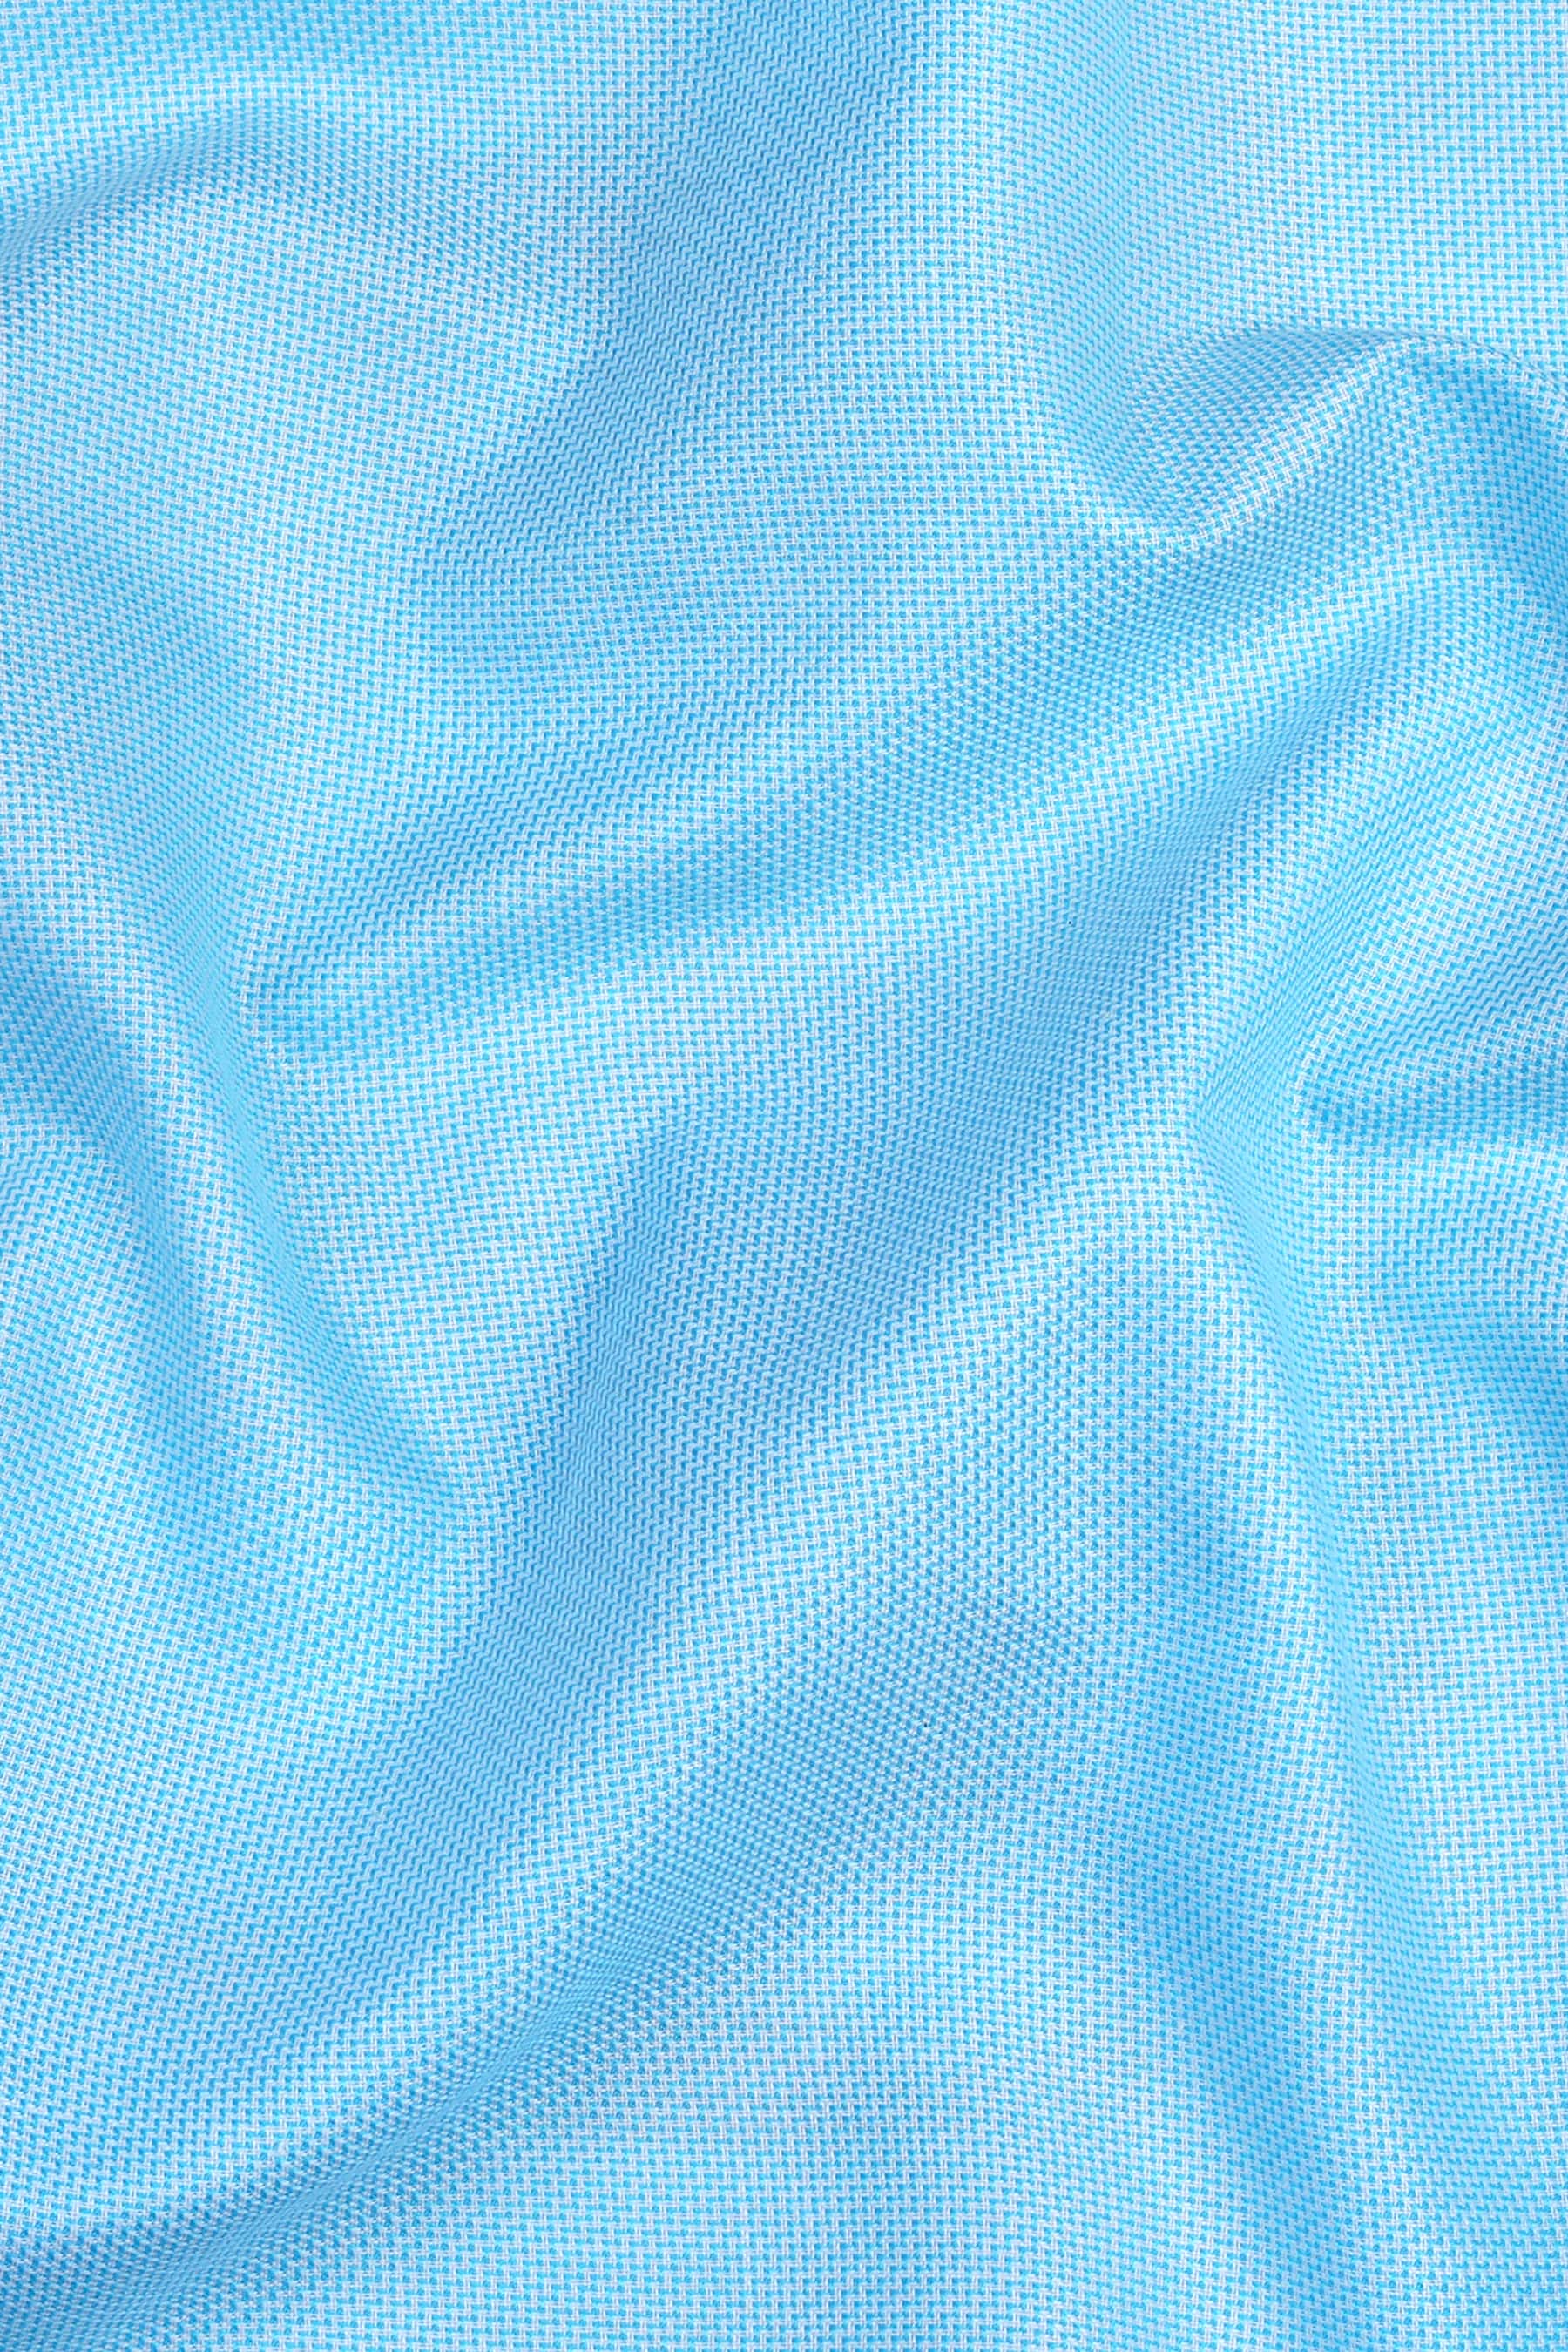 Turquoise sky blue dobby texture shirt